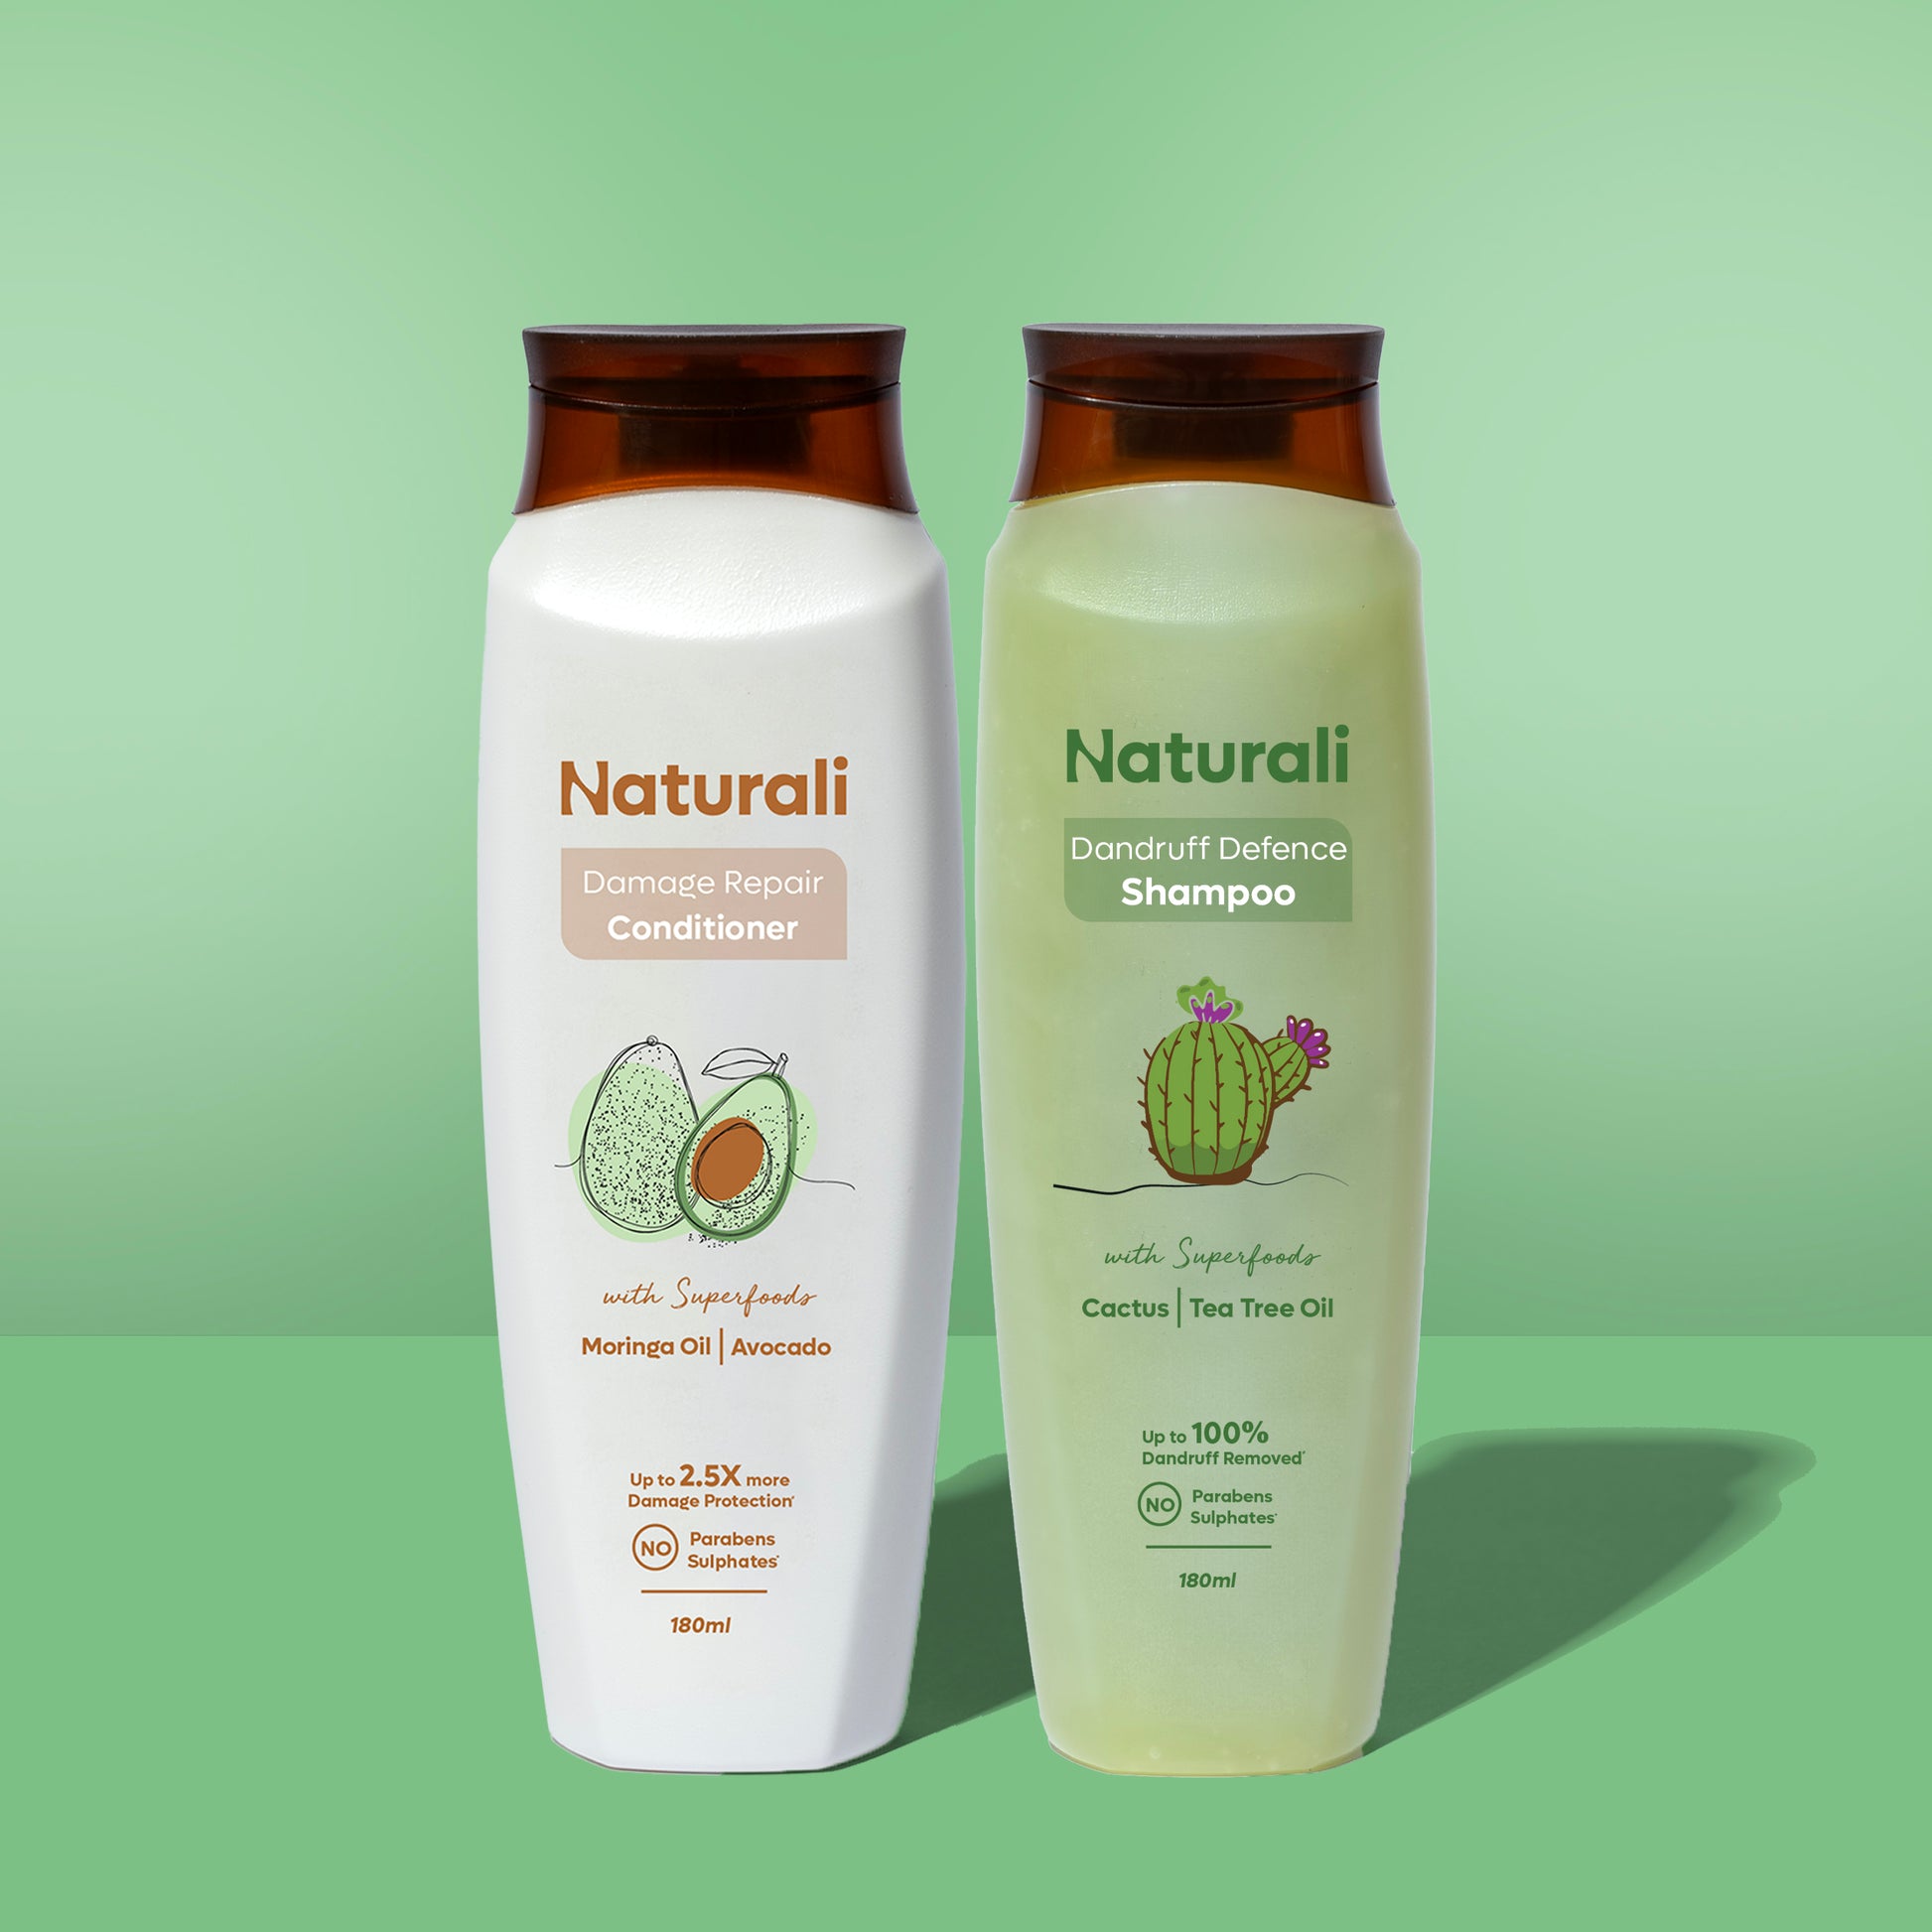 Naturali Dandruff Defence Shampoo + Damage Repair Conditioner